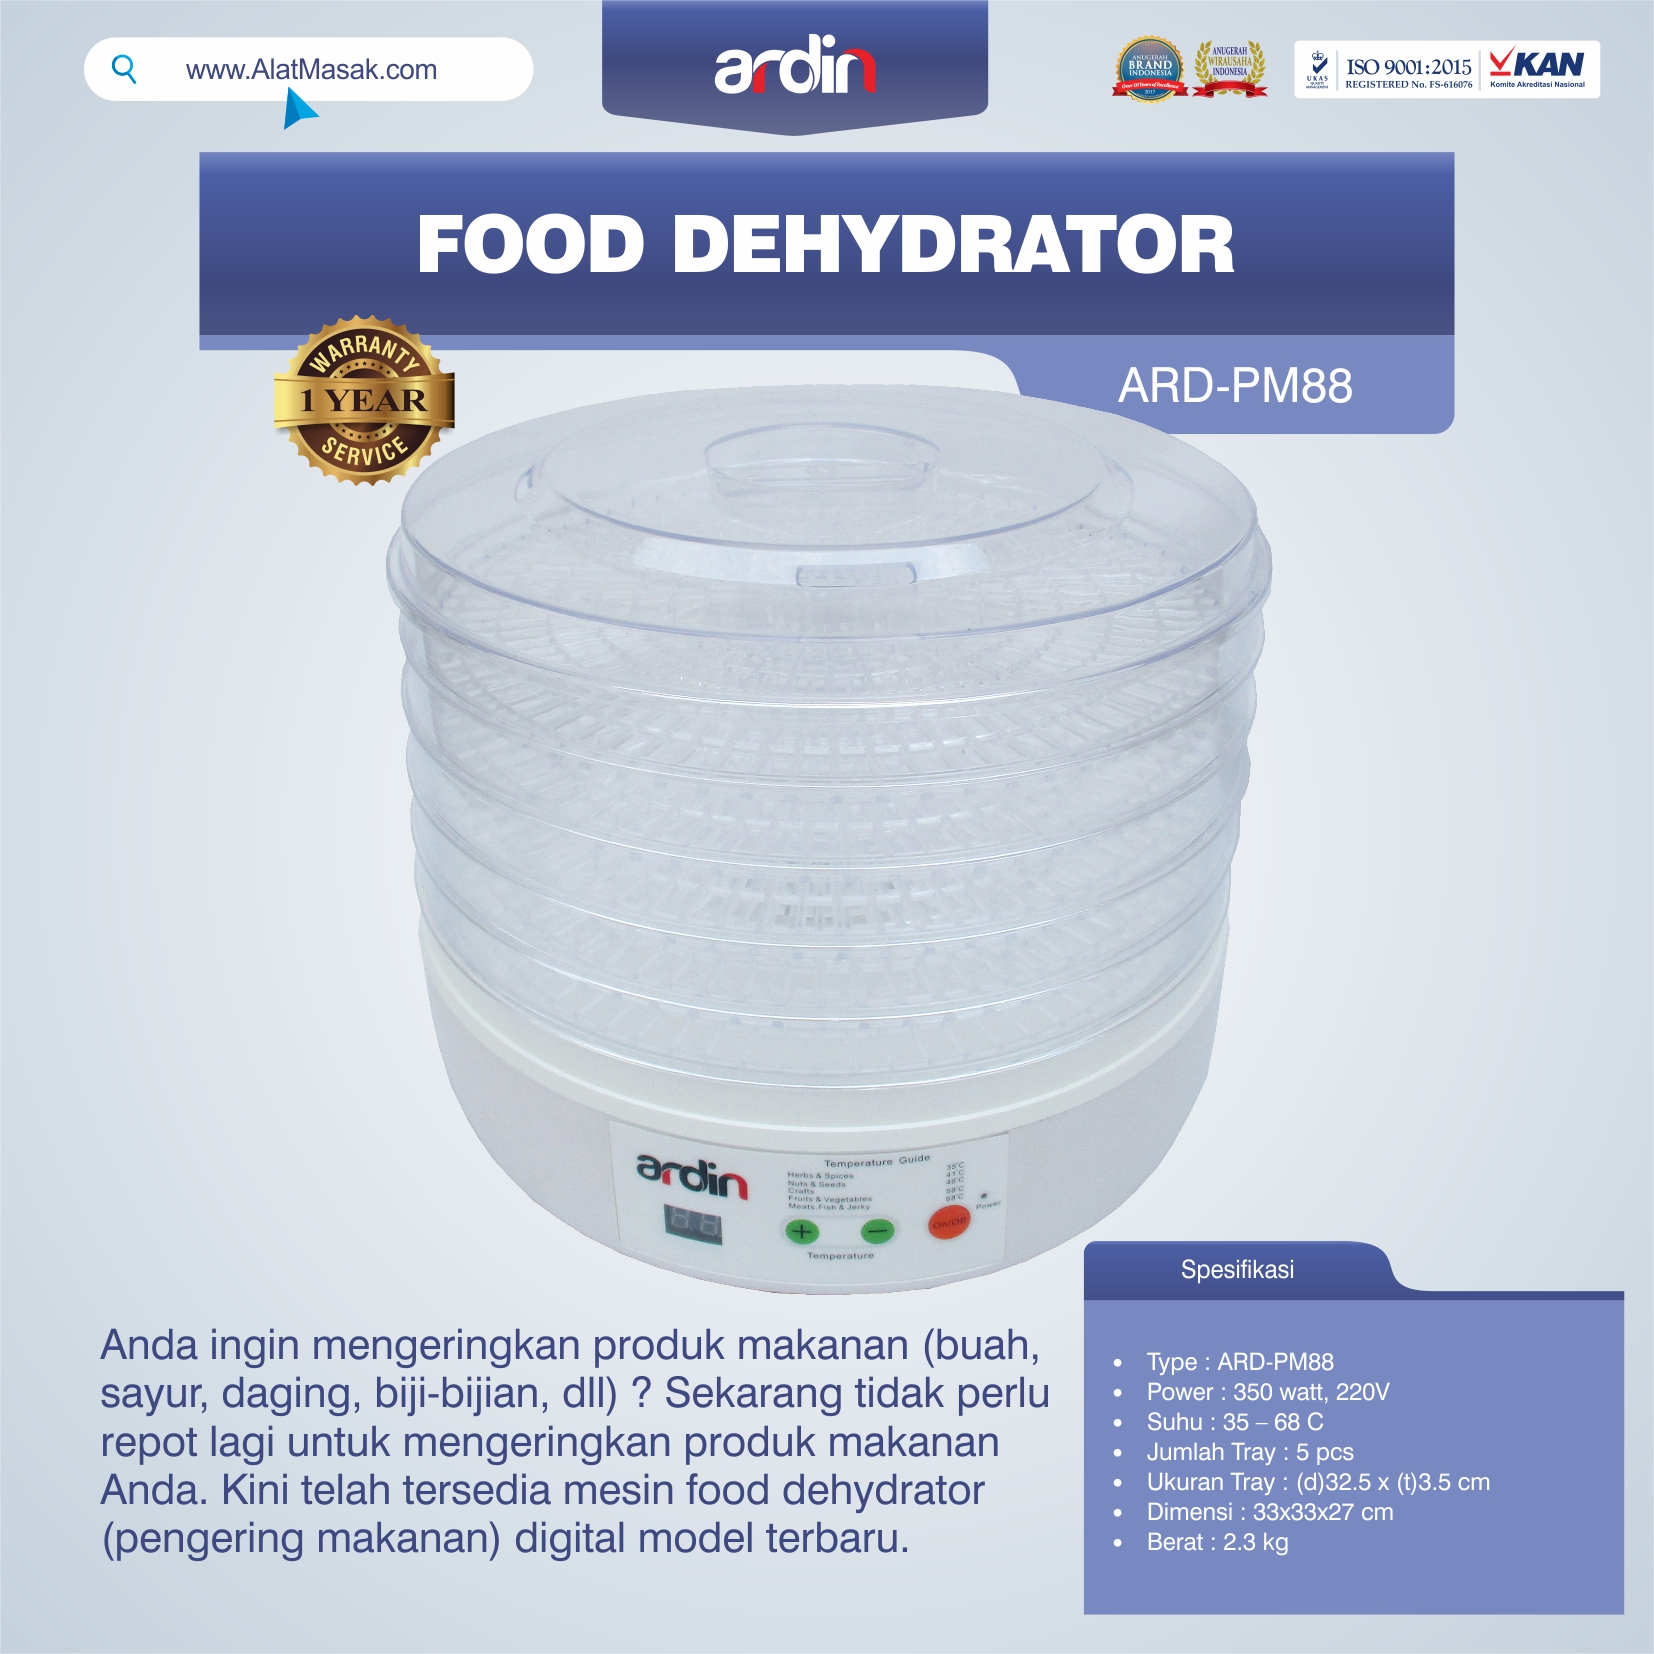 Jual Food Dehydrator ARD-PM88 di Pekanbaru